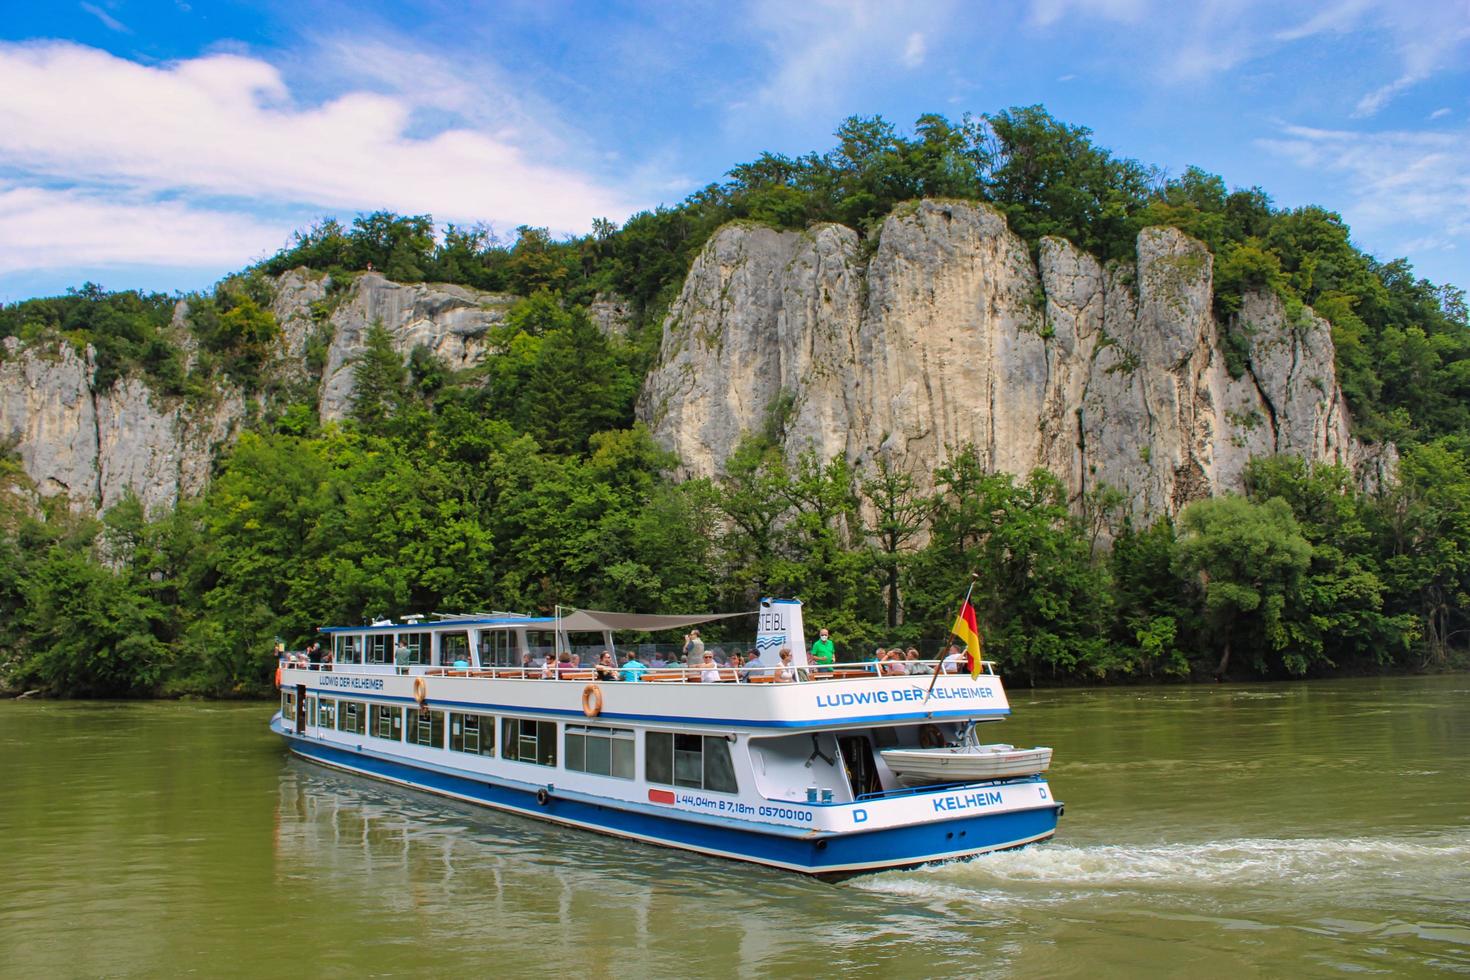 germania, 2021 - gita in barca da kehlheim a weltenburg sul fiume Danubio foto